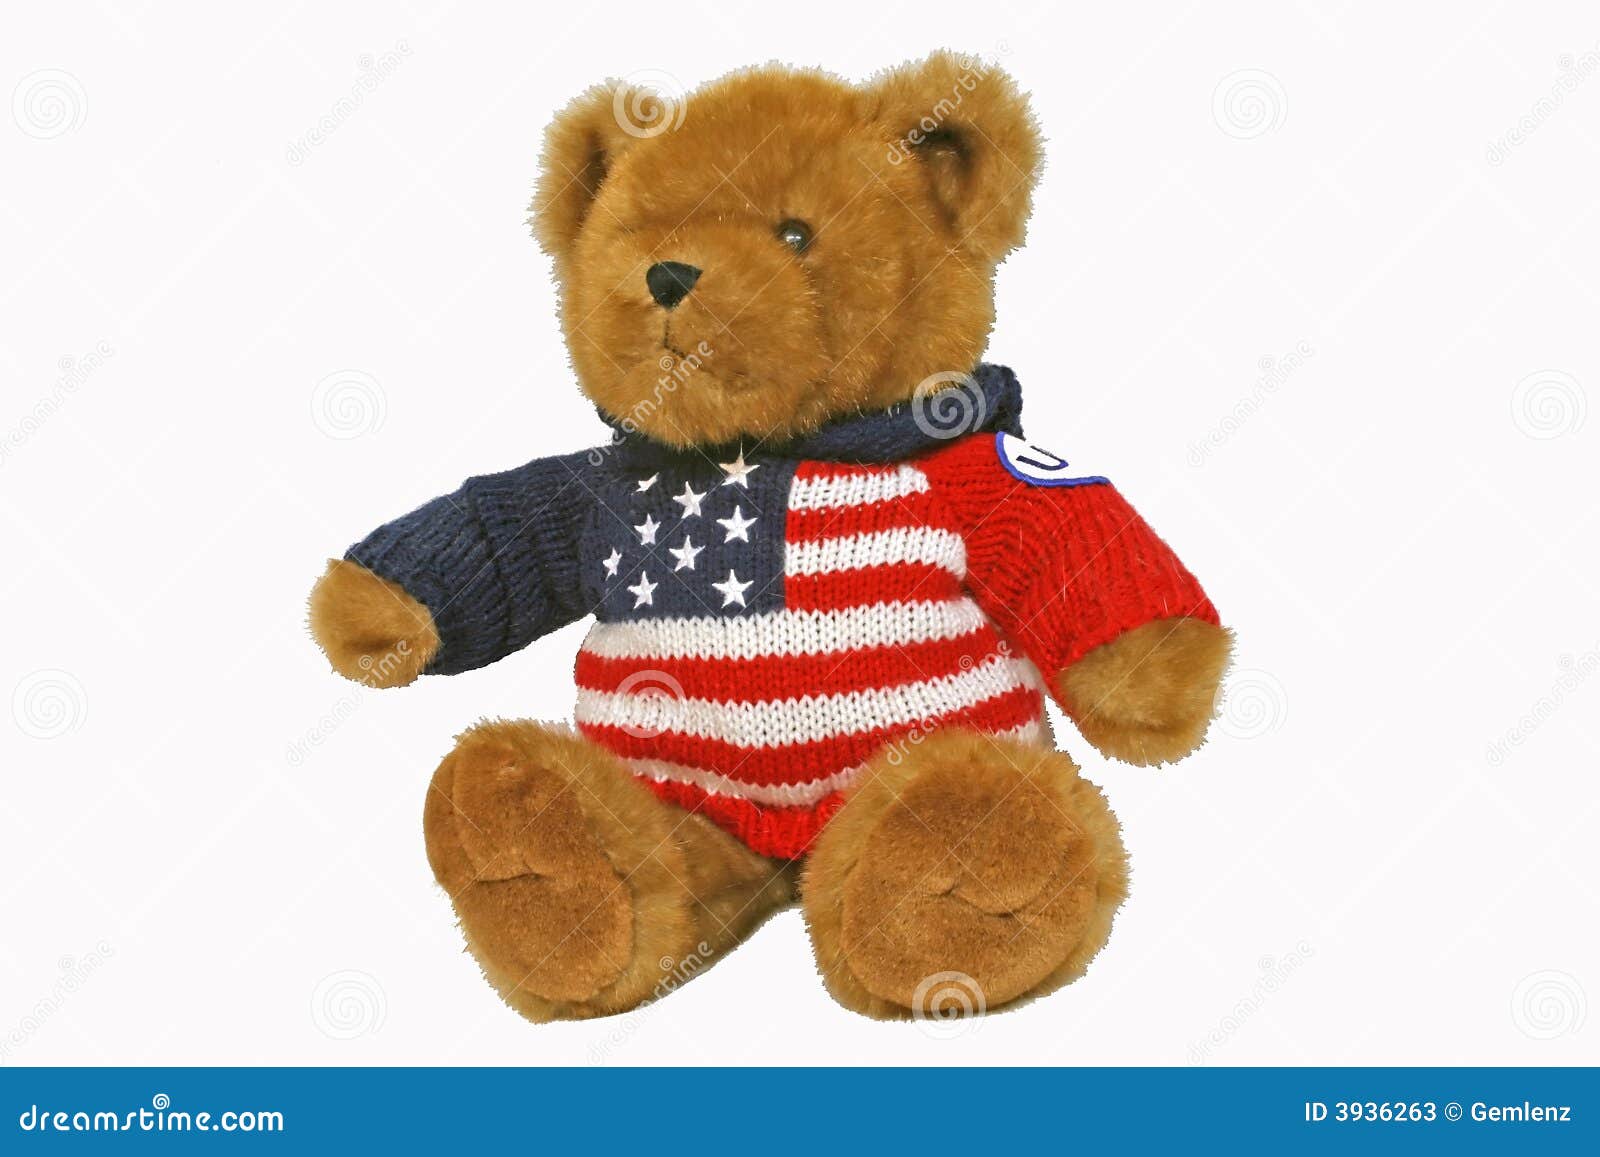 patriotic teddy bear clip art - photo #41